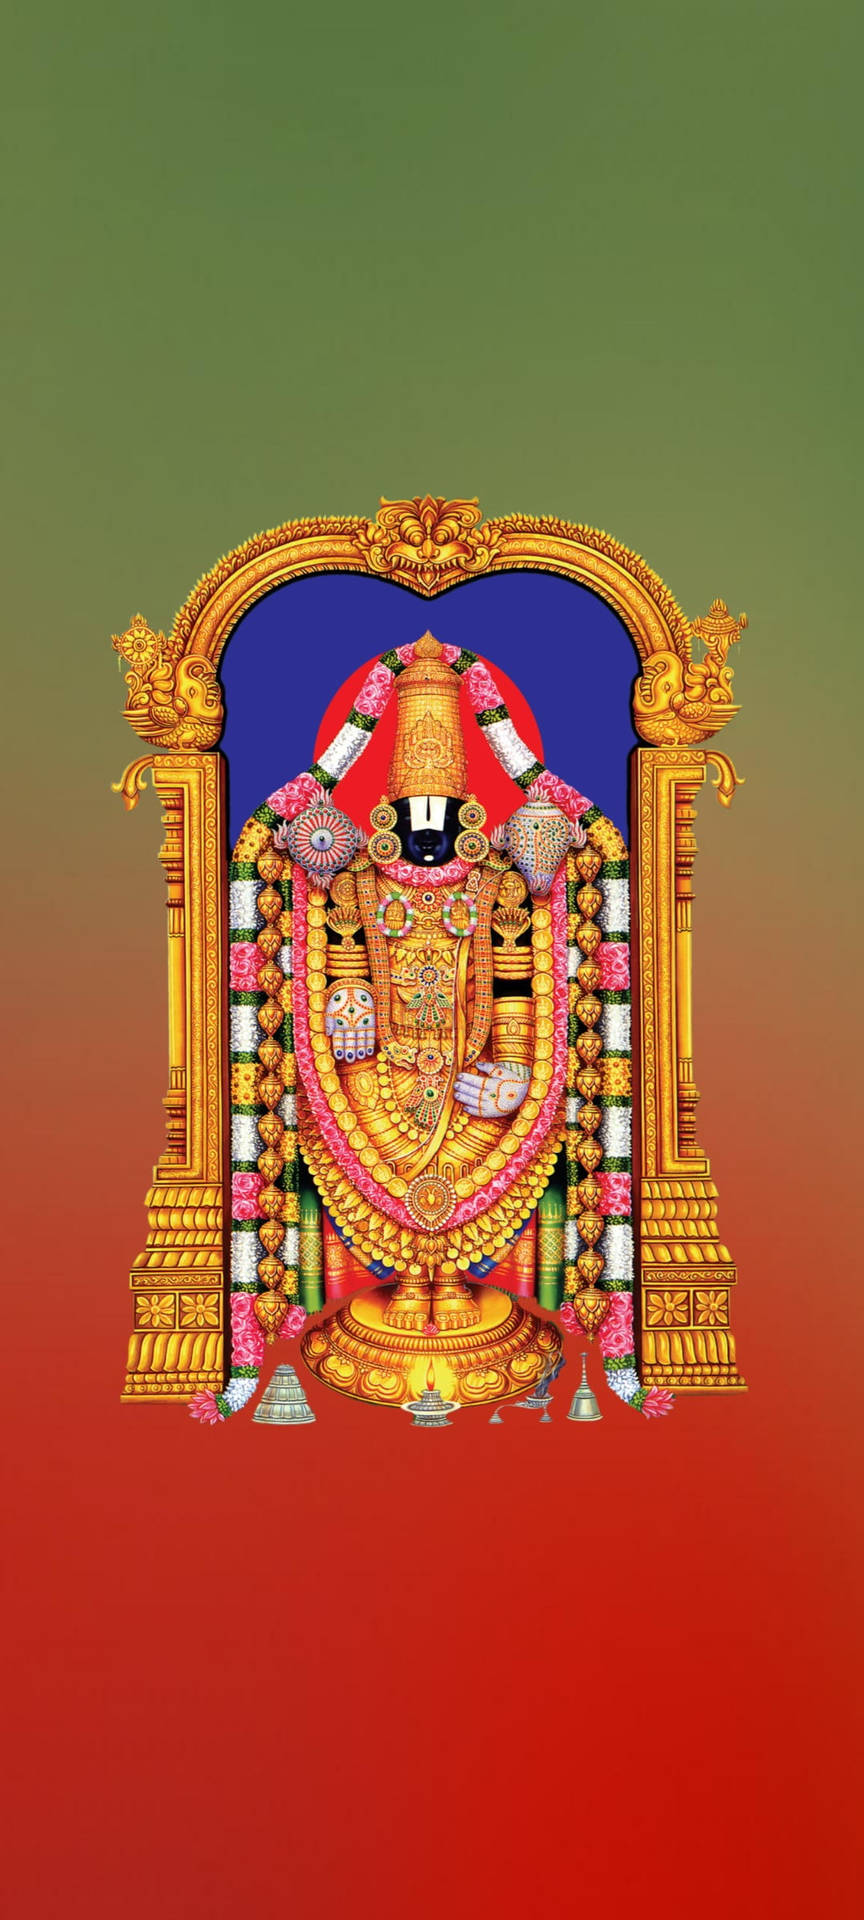 Venkateswara Swamy Hindu Deity